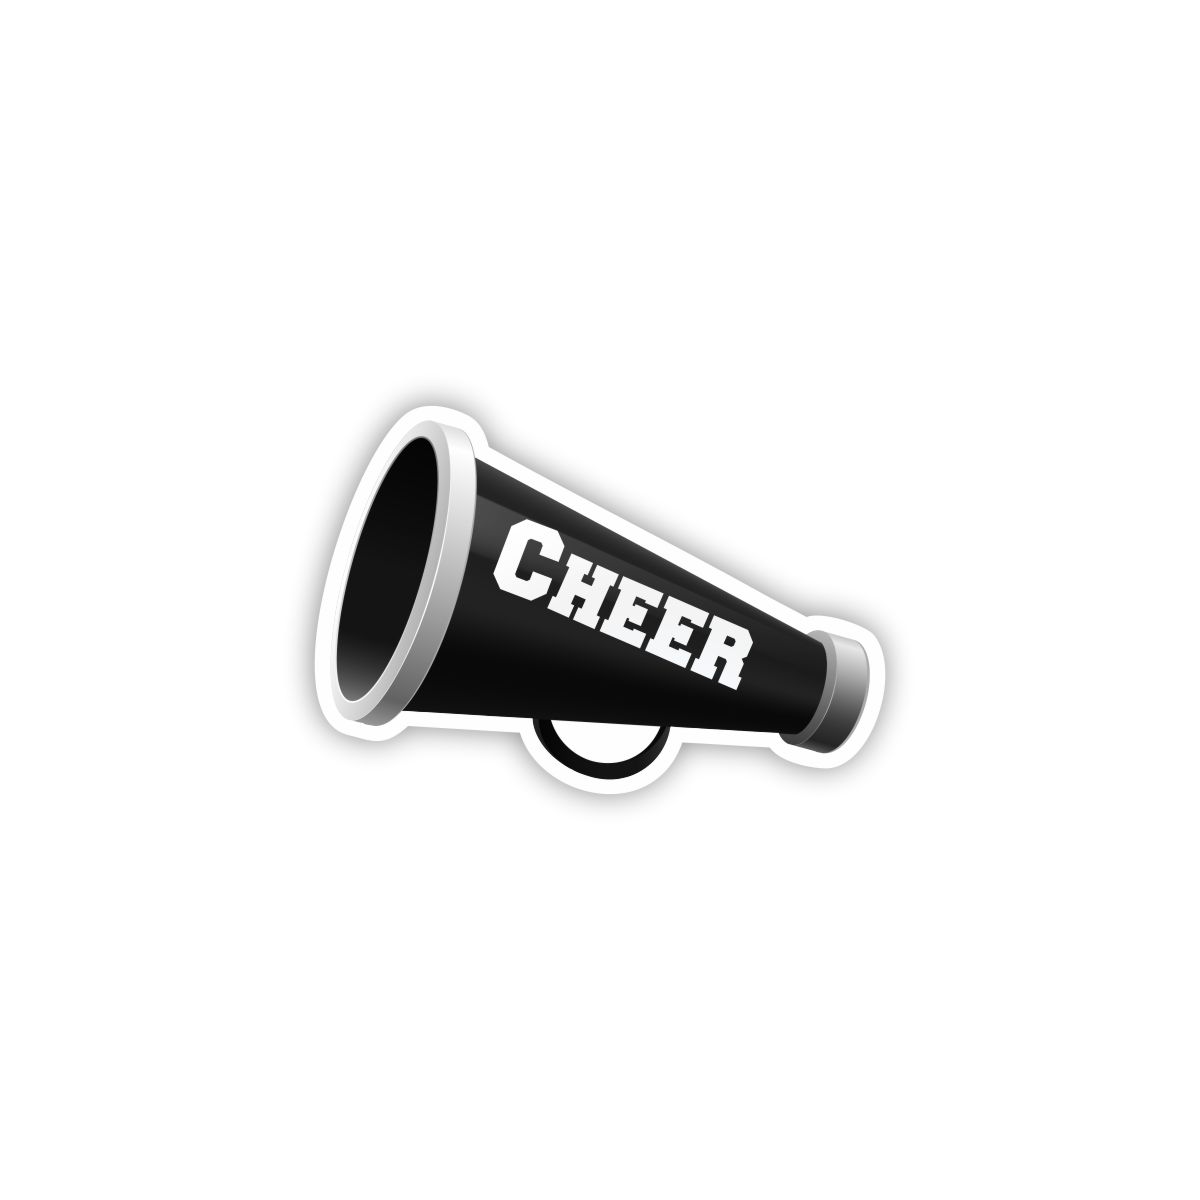 cheer megaphone clipart black and white